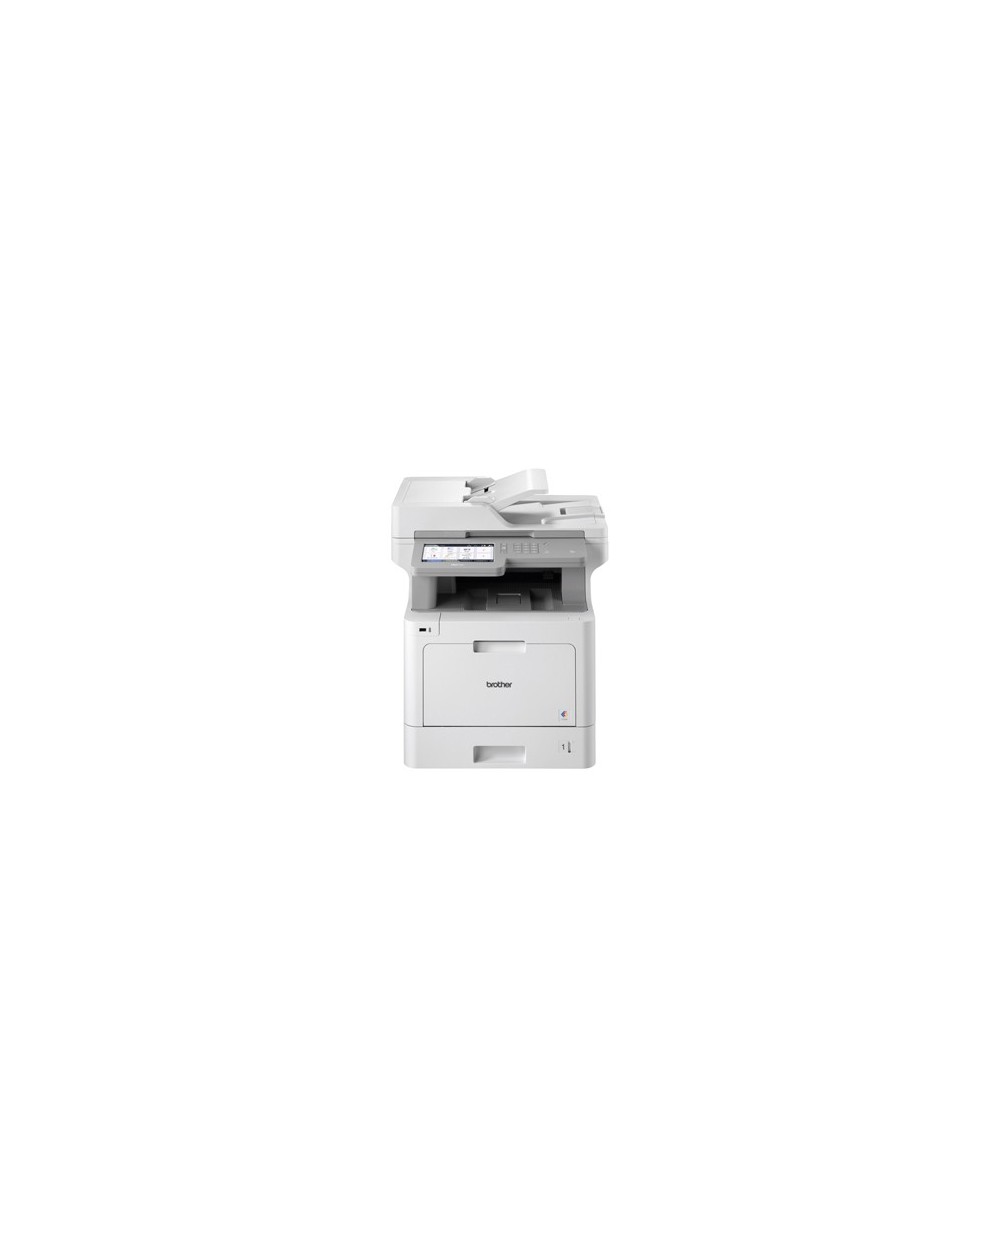 Equipo multifuncion brother mfc l9570cdw laser color 31 ppm 31 ppm copiadora escaner impresora fax bandeja